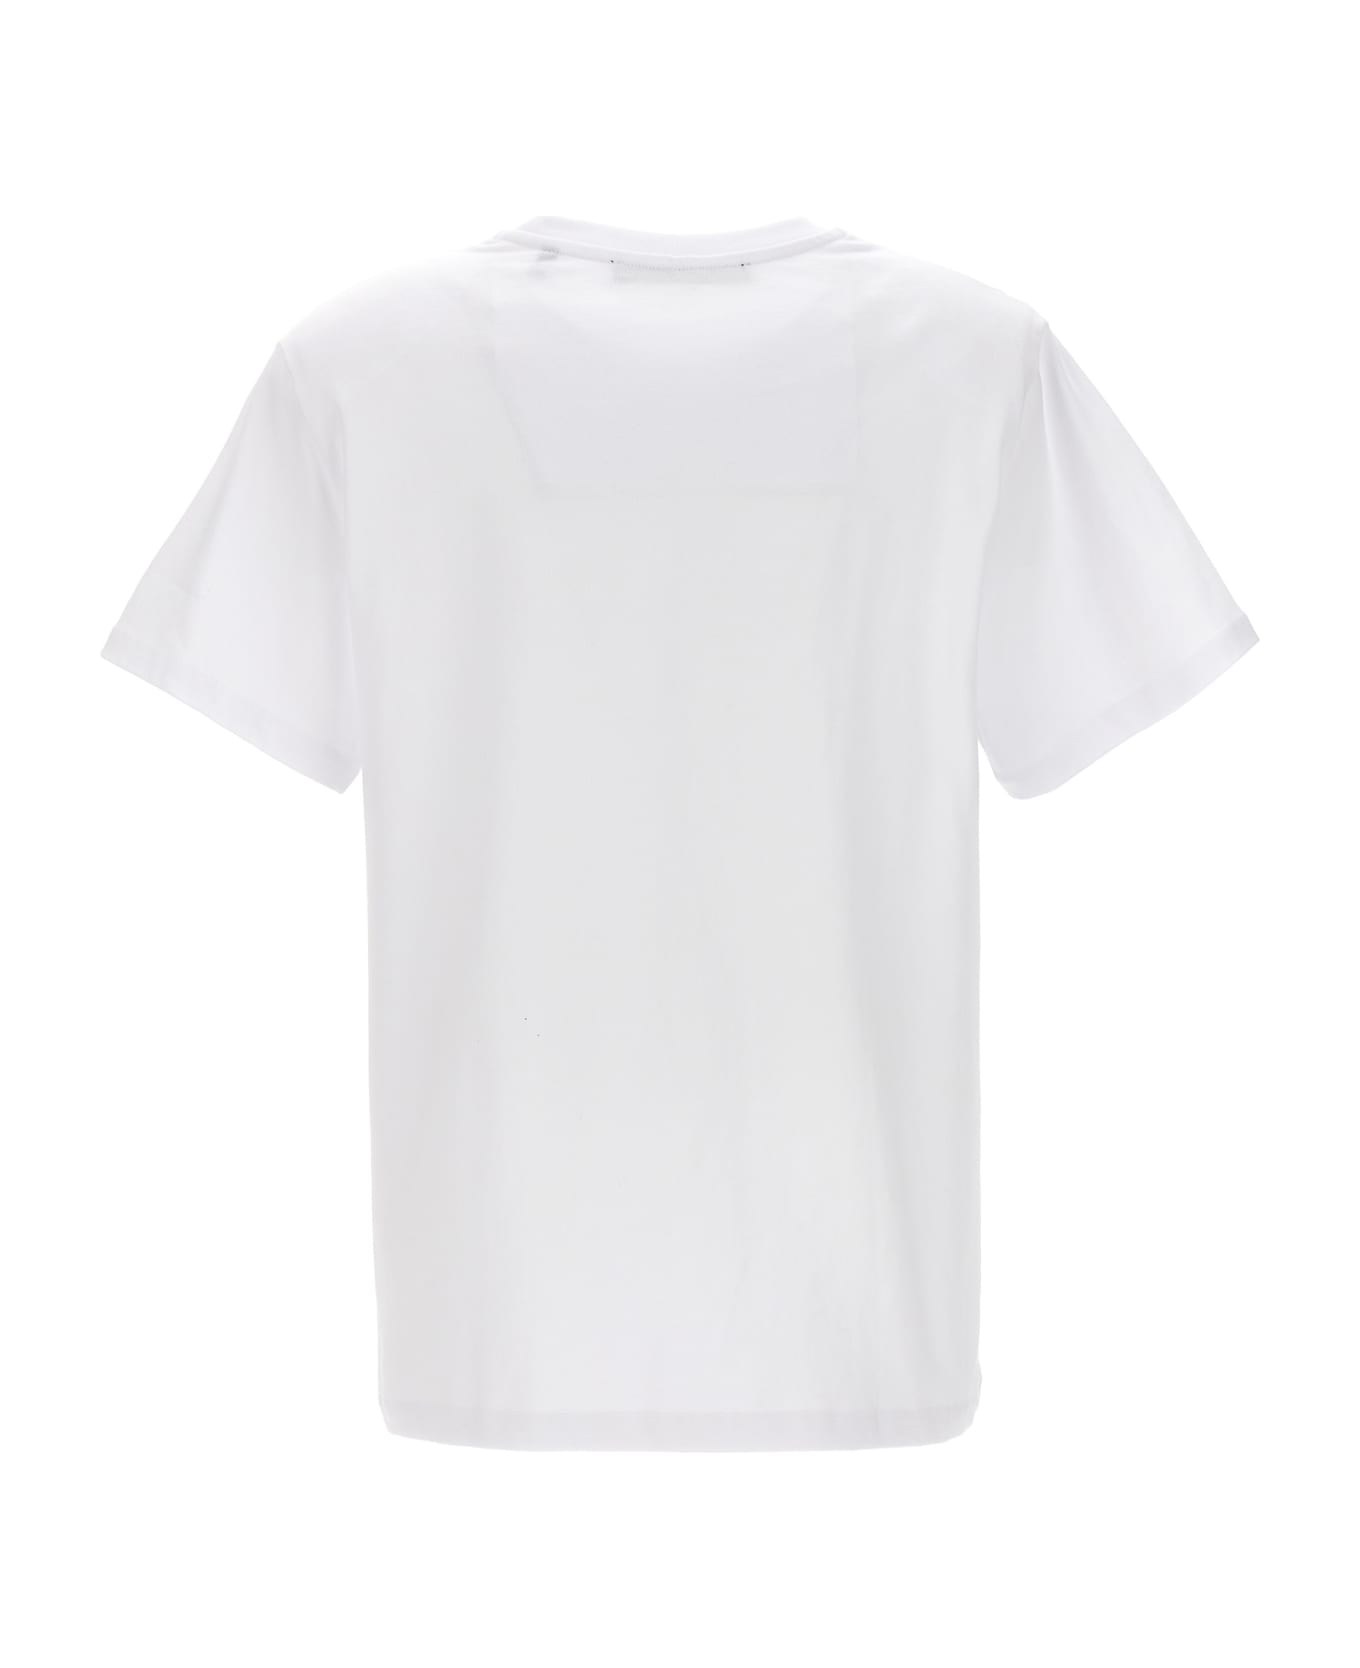 Rotate by Birger Christensen 'aja' T-shirt - White